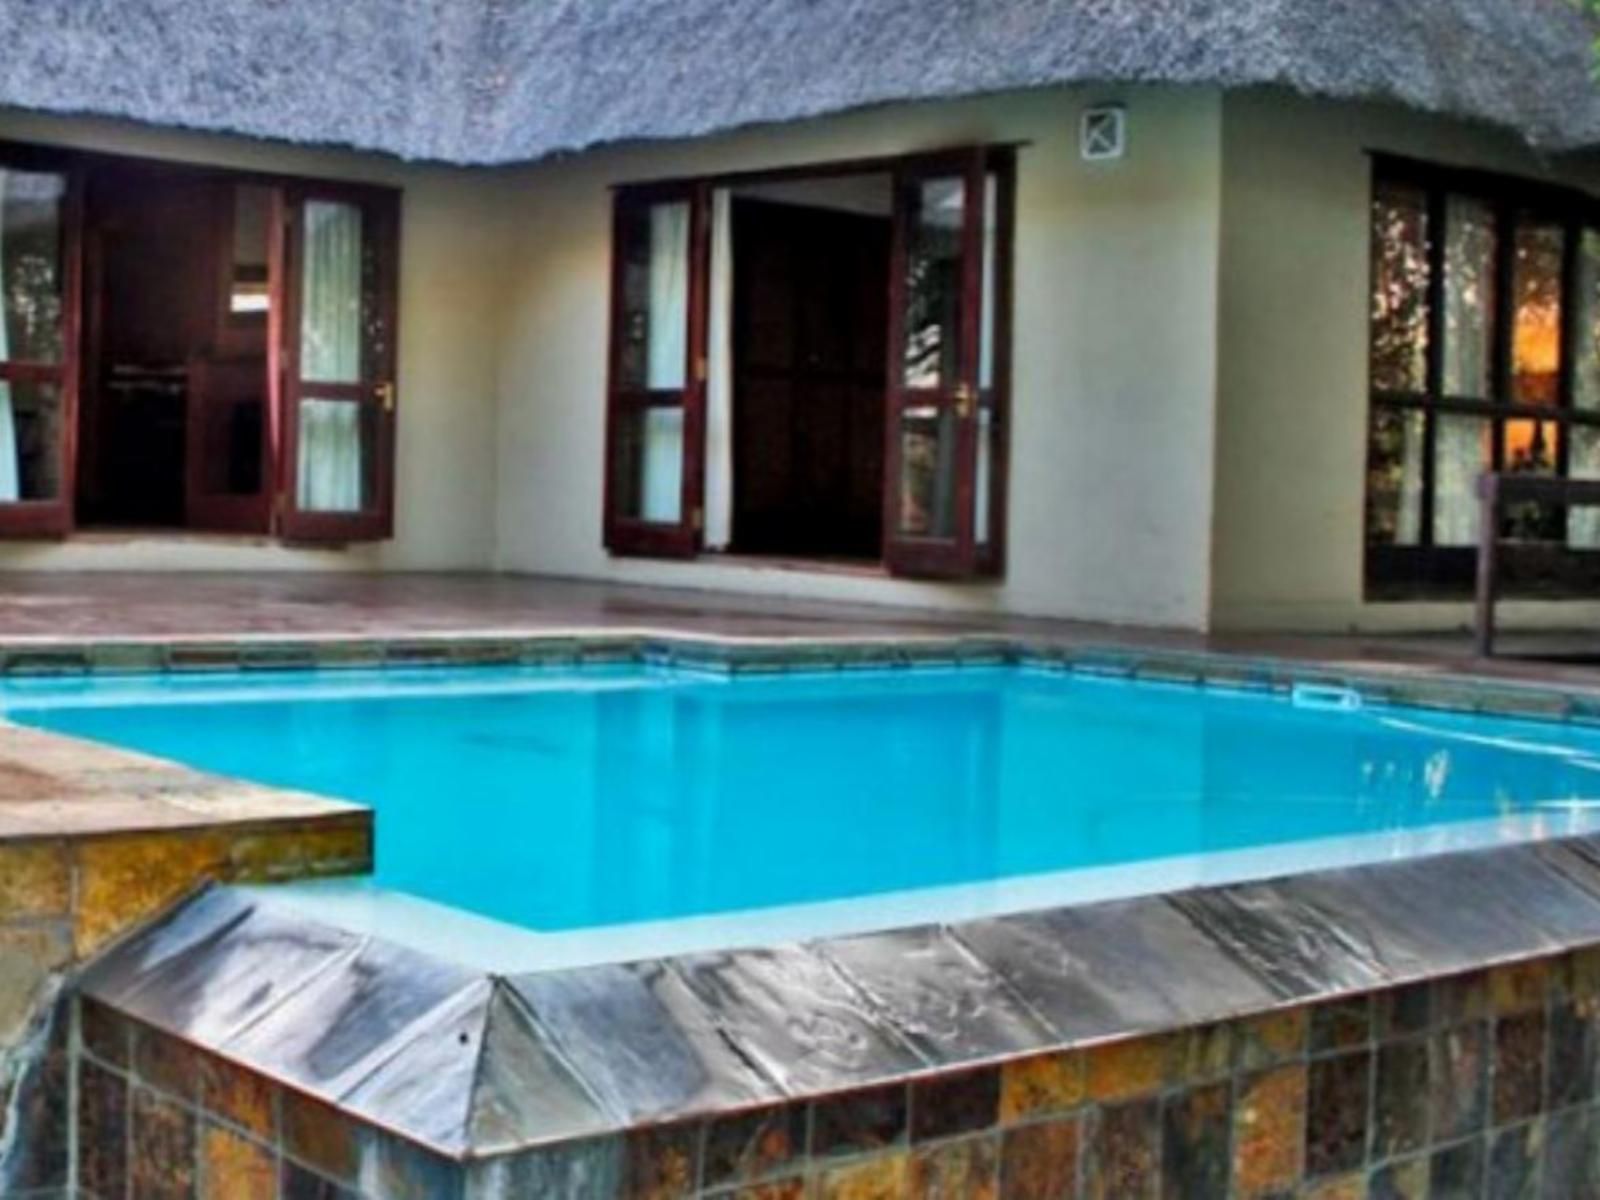 Kokobela Lodge Phalaborwa Limpopo Province South Africa House, Building, Architecture, Swimming Pool